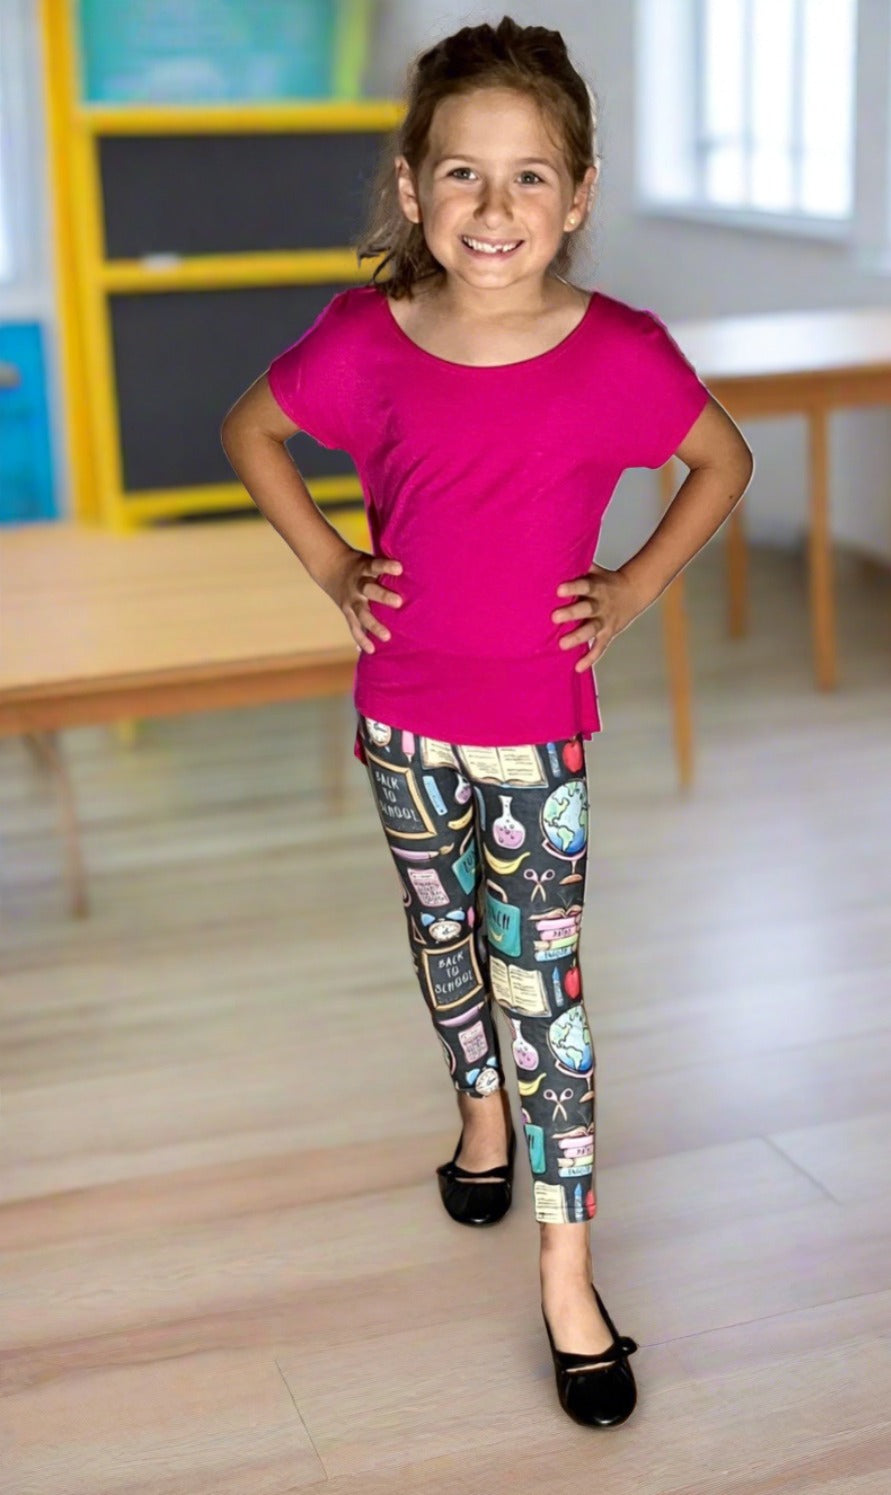 URMAGIC 3-8 Years Girls' Athletic Leggings Kids Dance Running Yoga Pants  Workout Active Dance Tights 